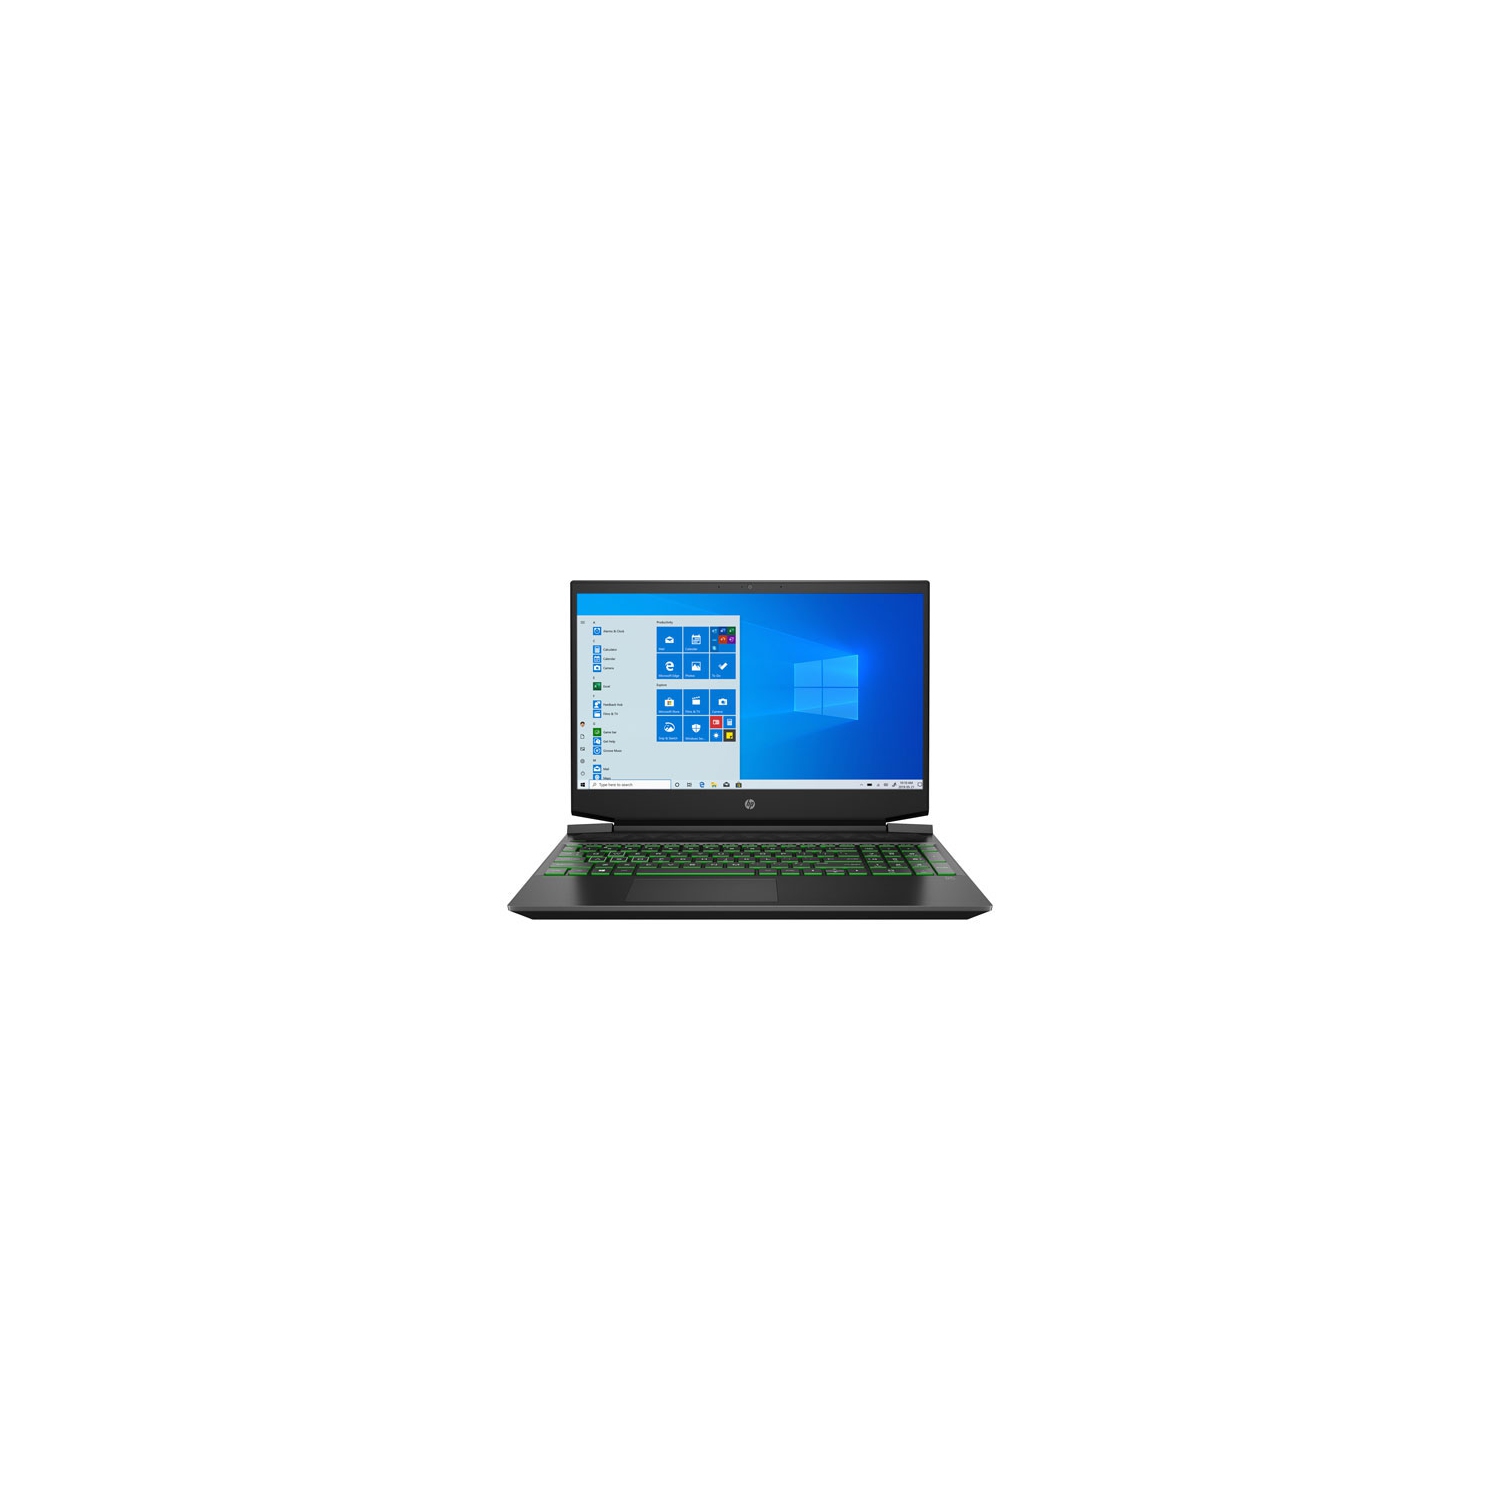 HP Pavilion 15.6" Gaming Laptop - Shadow Black (AMD Ryzen 5 5600H/512GB SSD/8GB RAM/GTX 1650) - Open Box